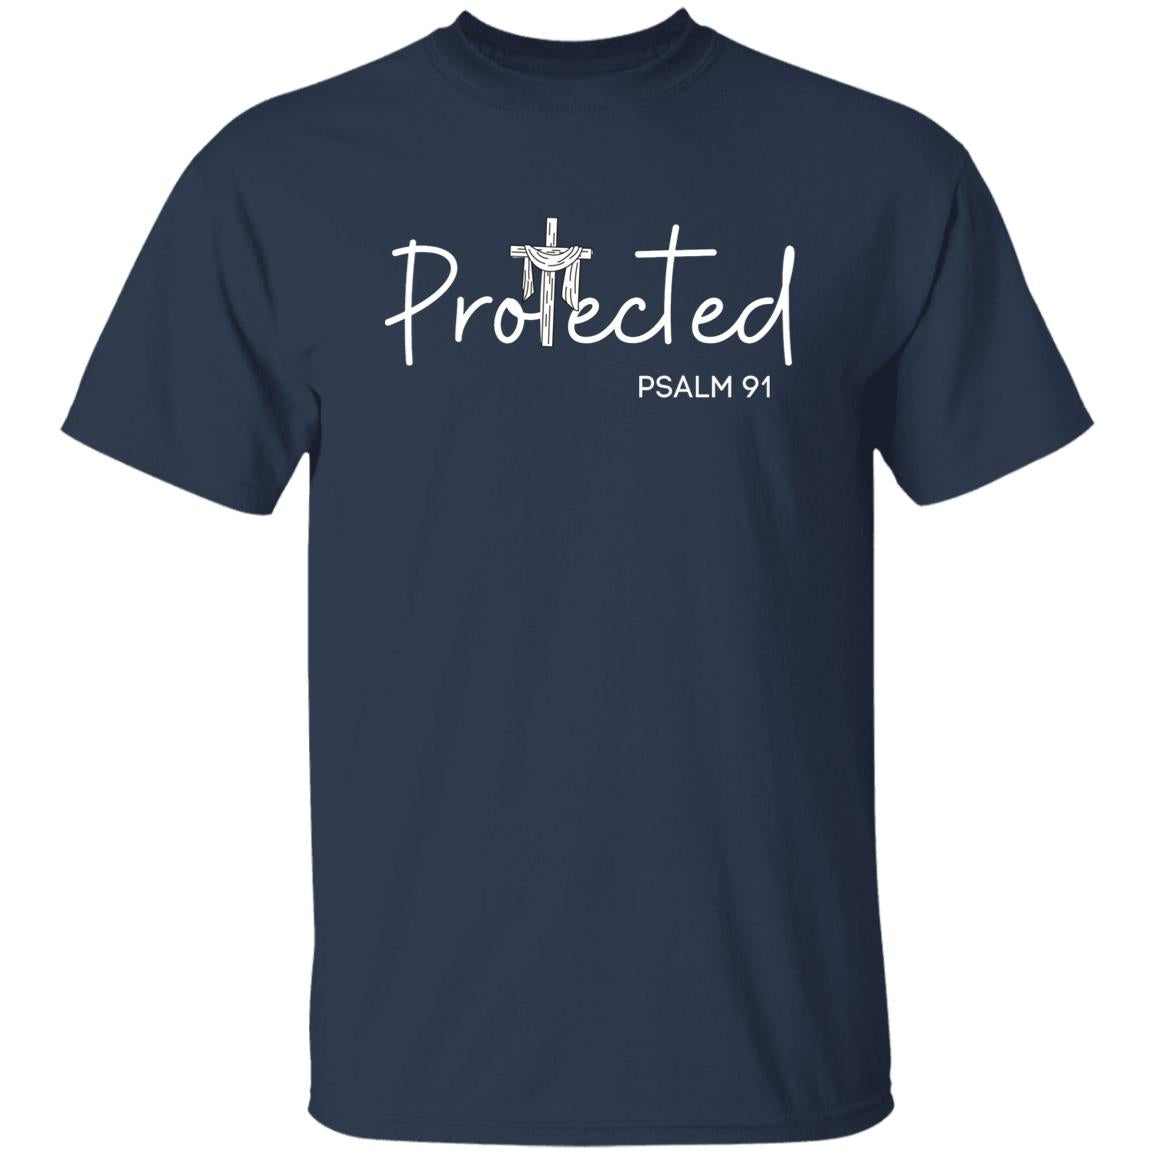 Protected T-Shirt-Psaml 91